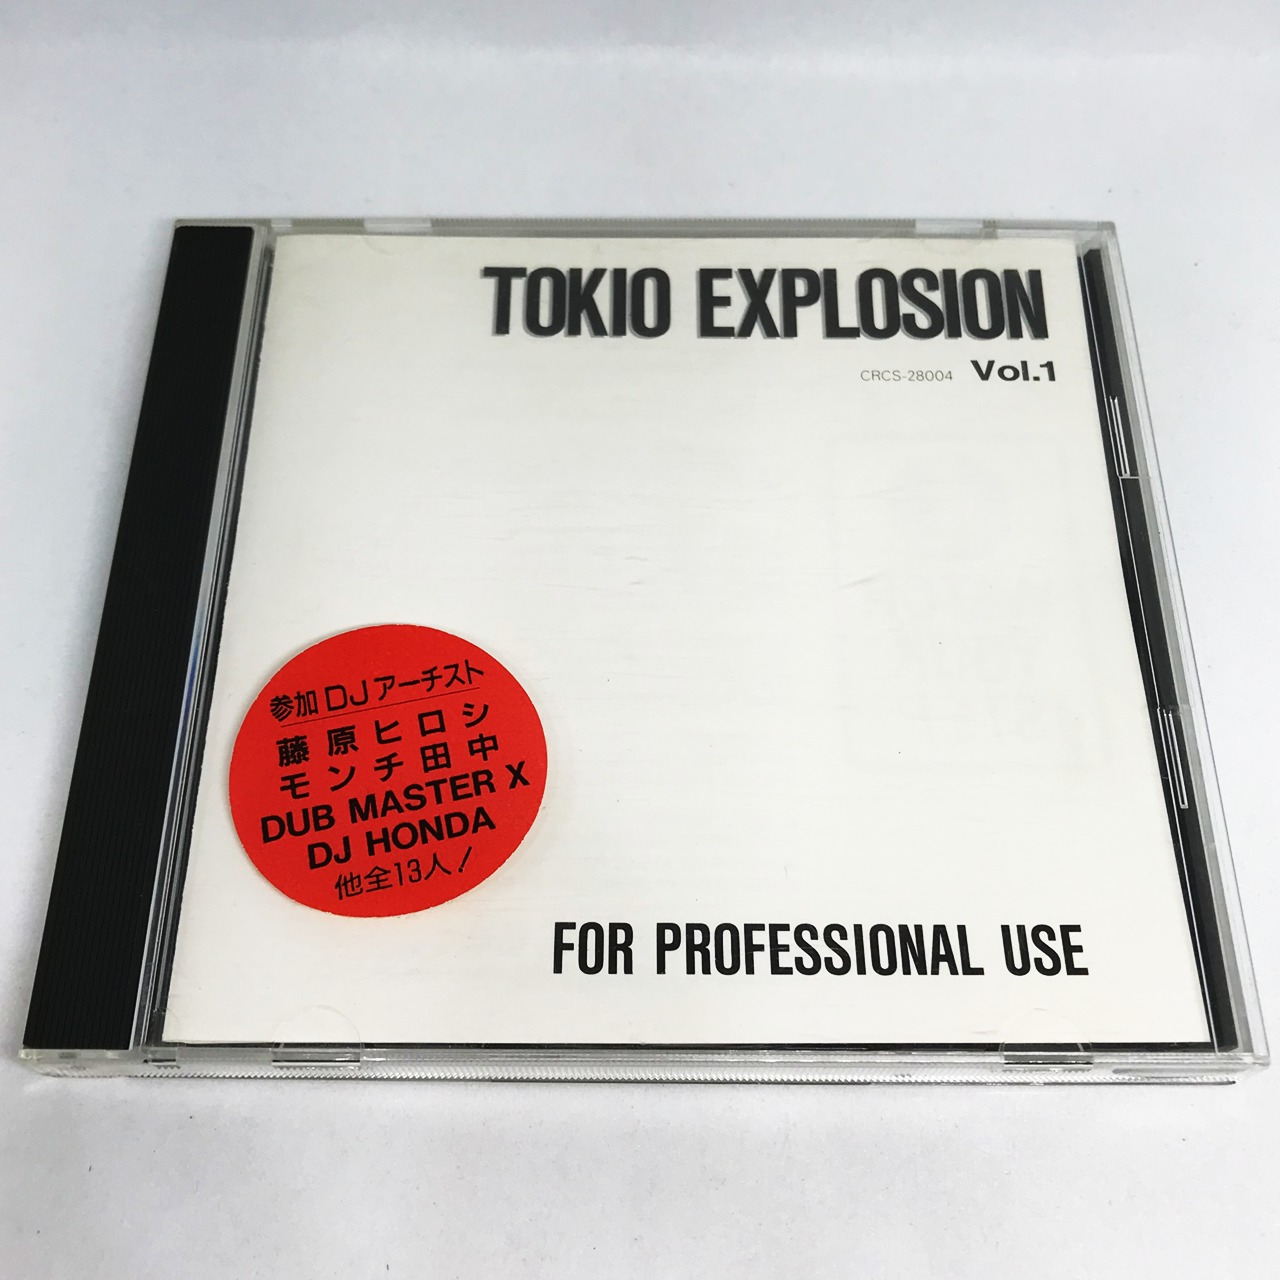 Tokio Explosion Vol.1